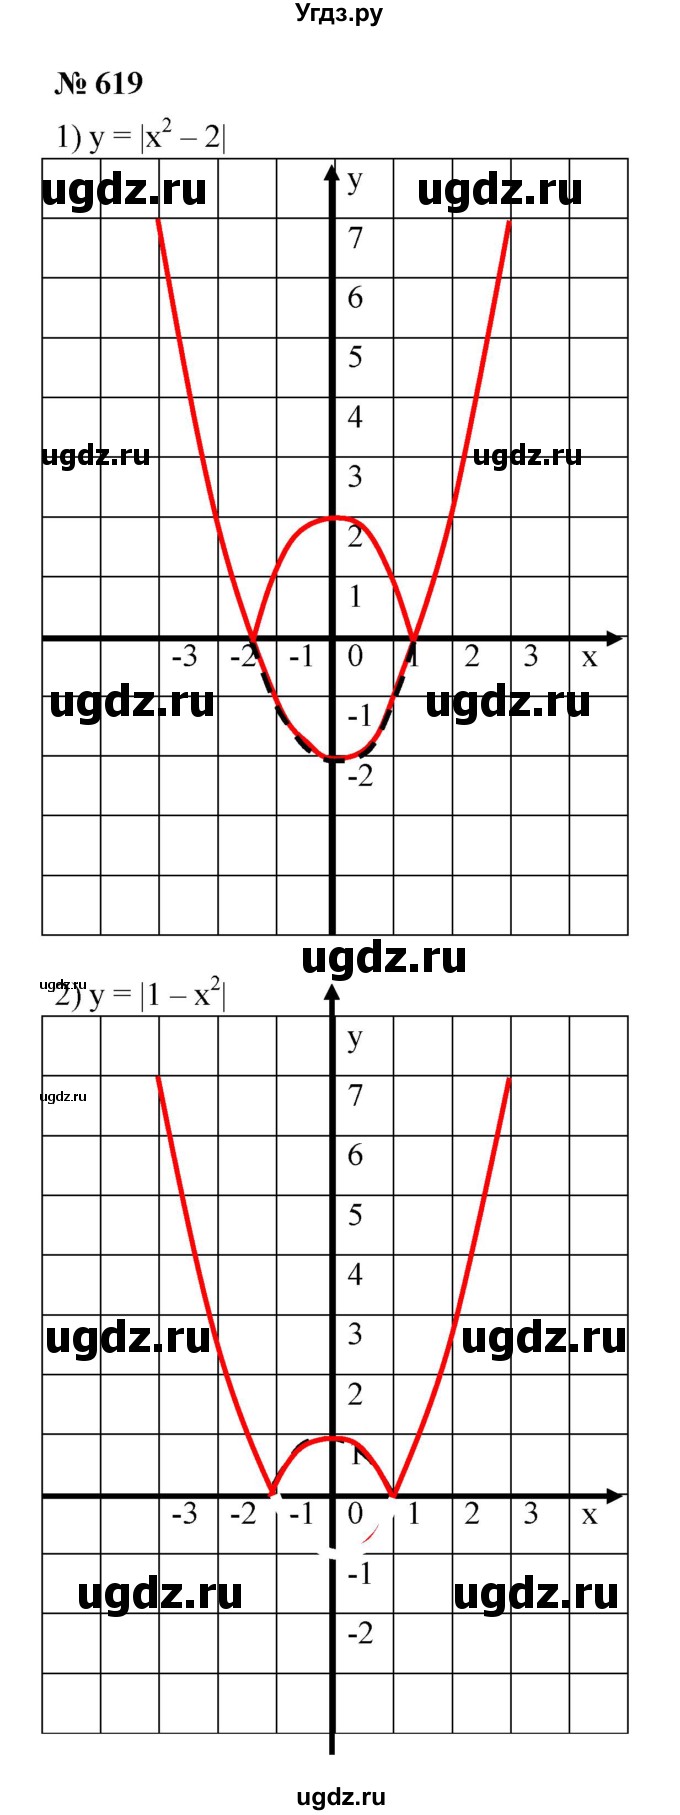 619. Построить график функции:
1) у = │х^2-2│;	
2) у = │1 – х^2 │ ;
3) у =│2-(х-1)^2 |; 
4) у = │х^2-5х + 6│.